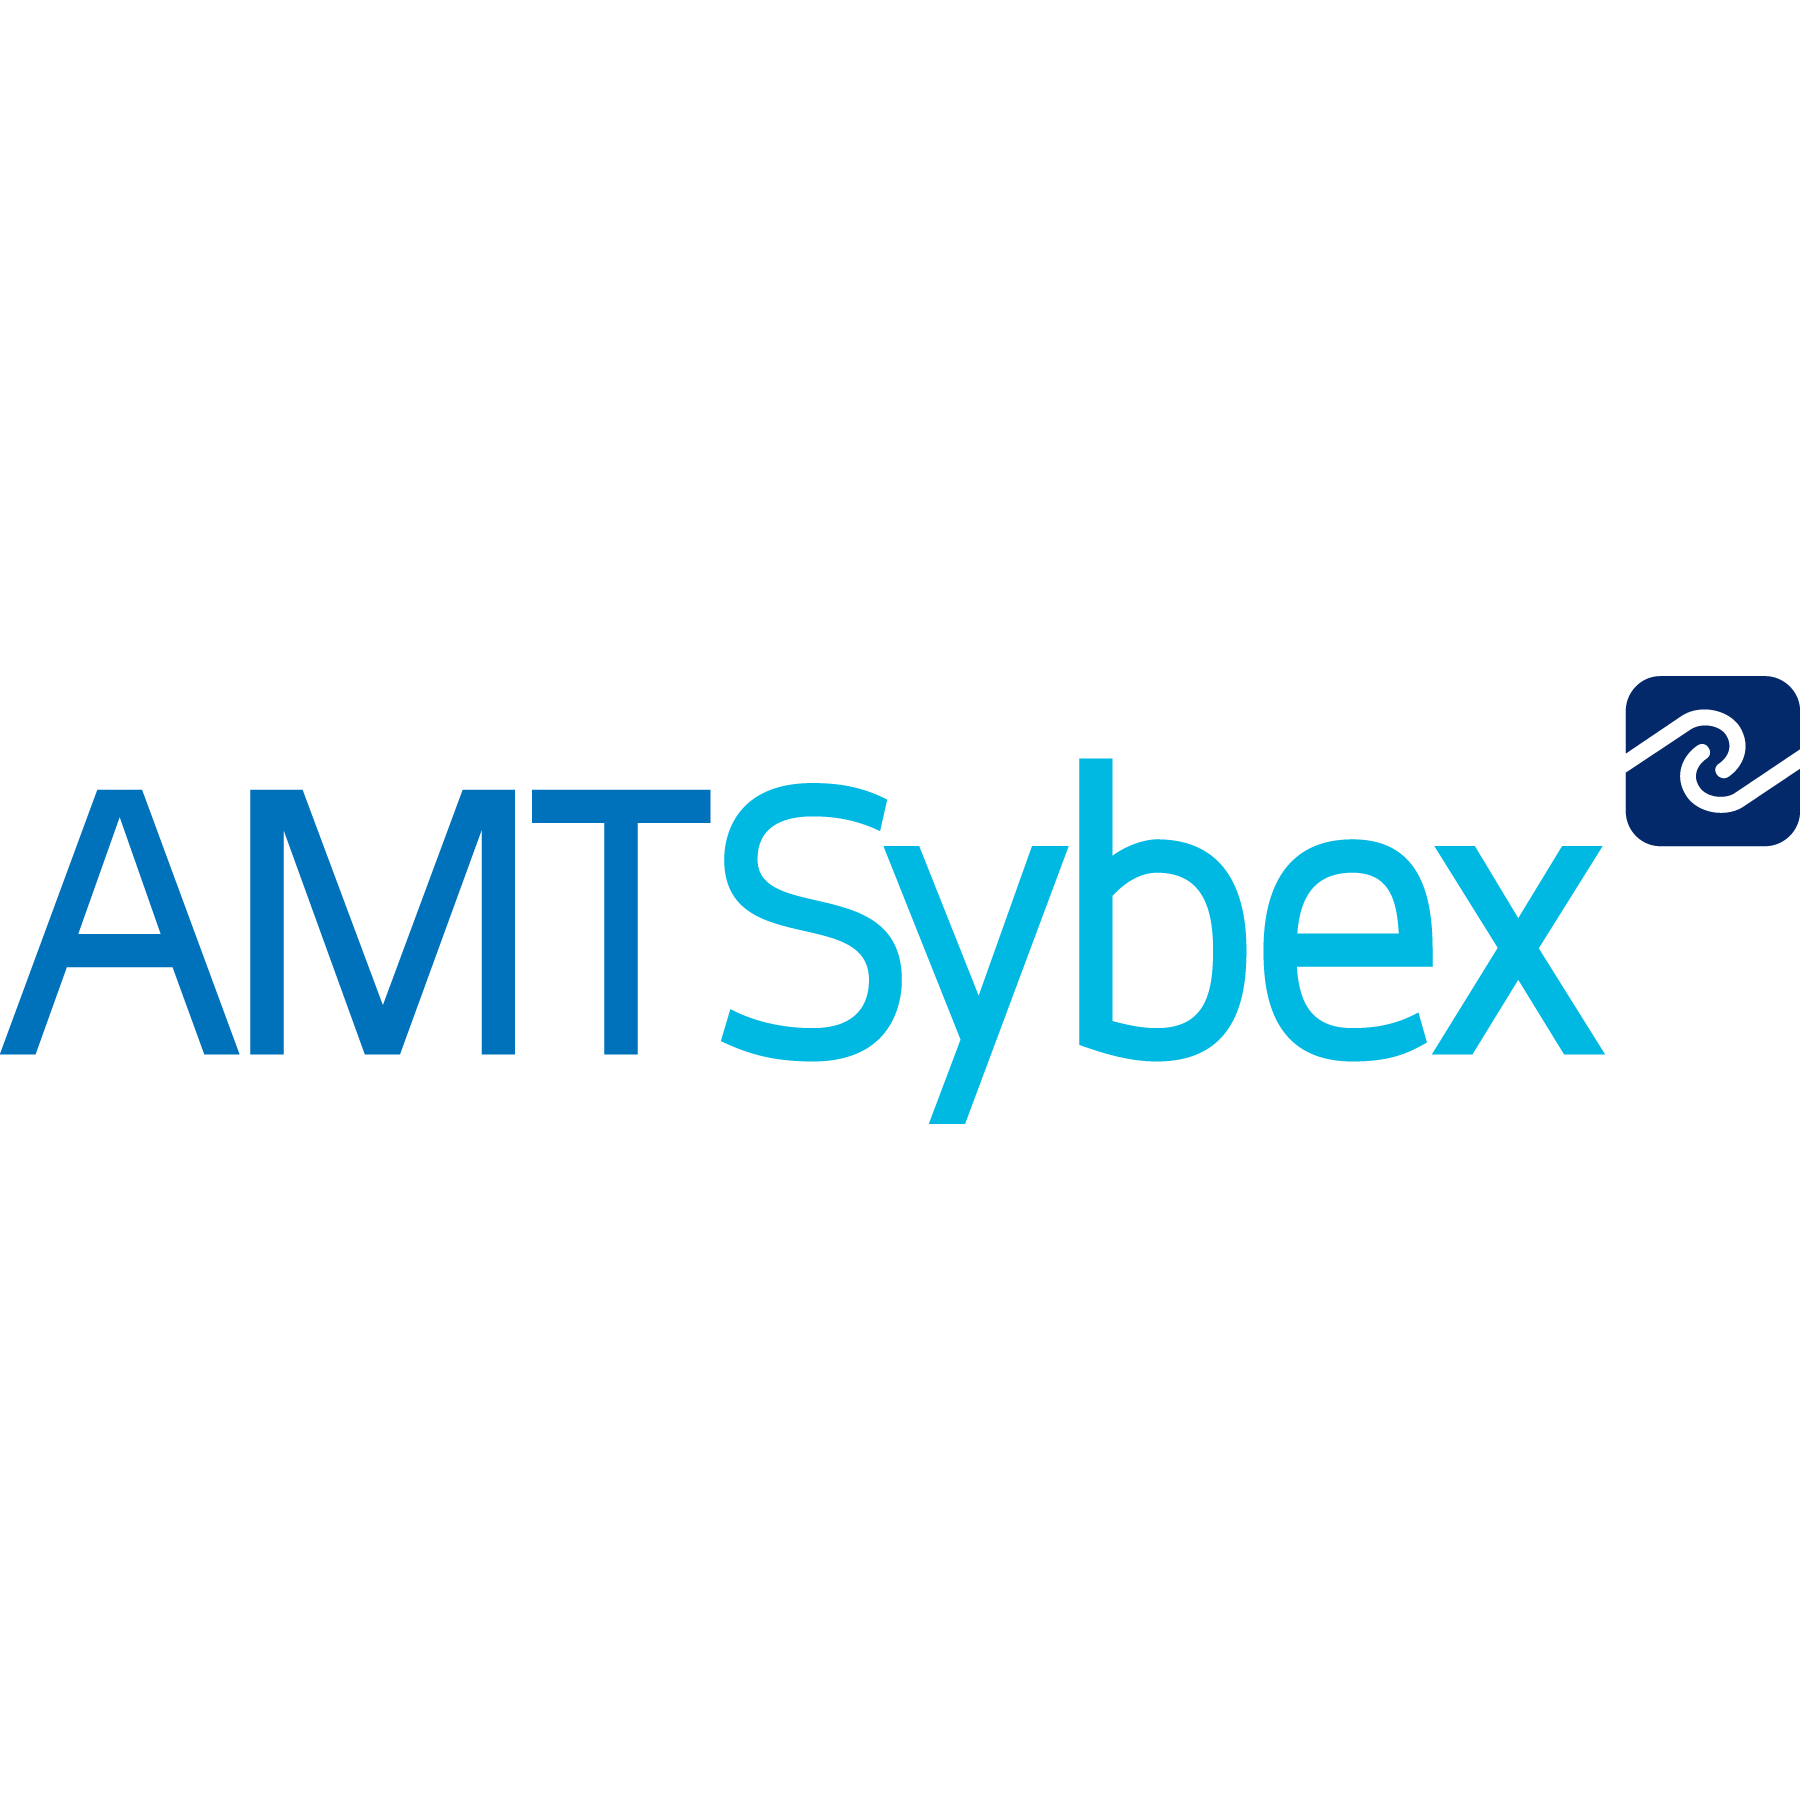 AMT Sybex